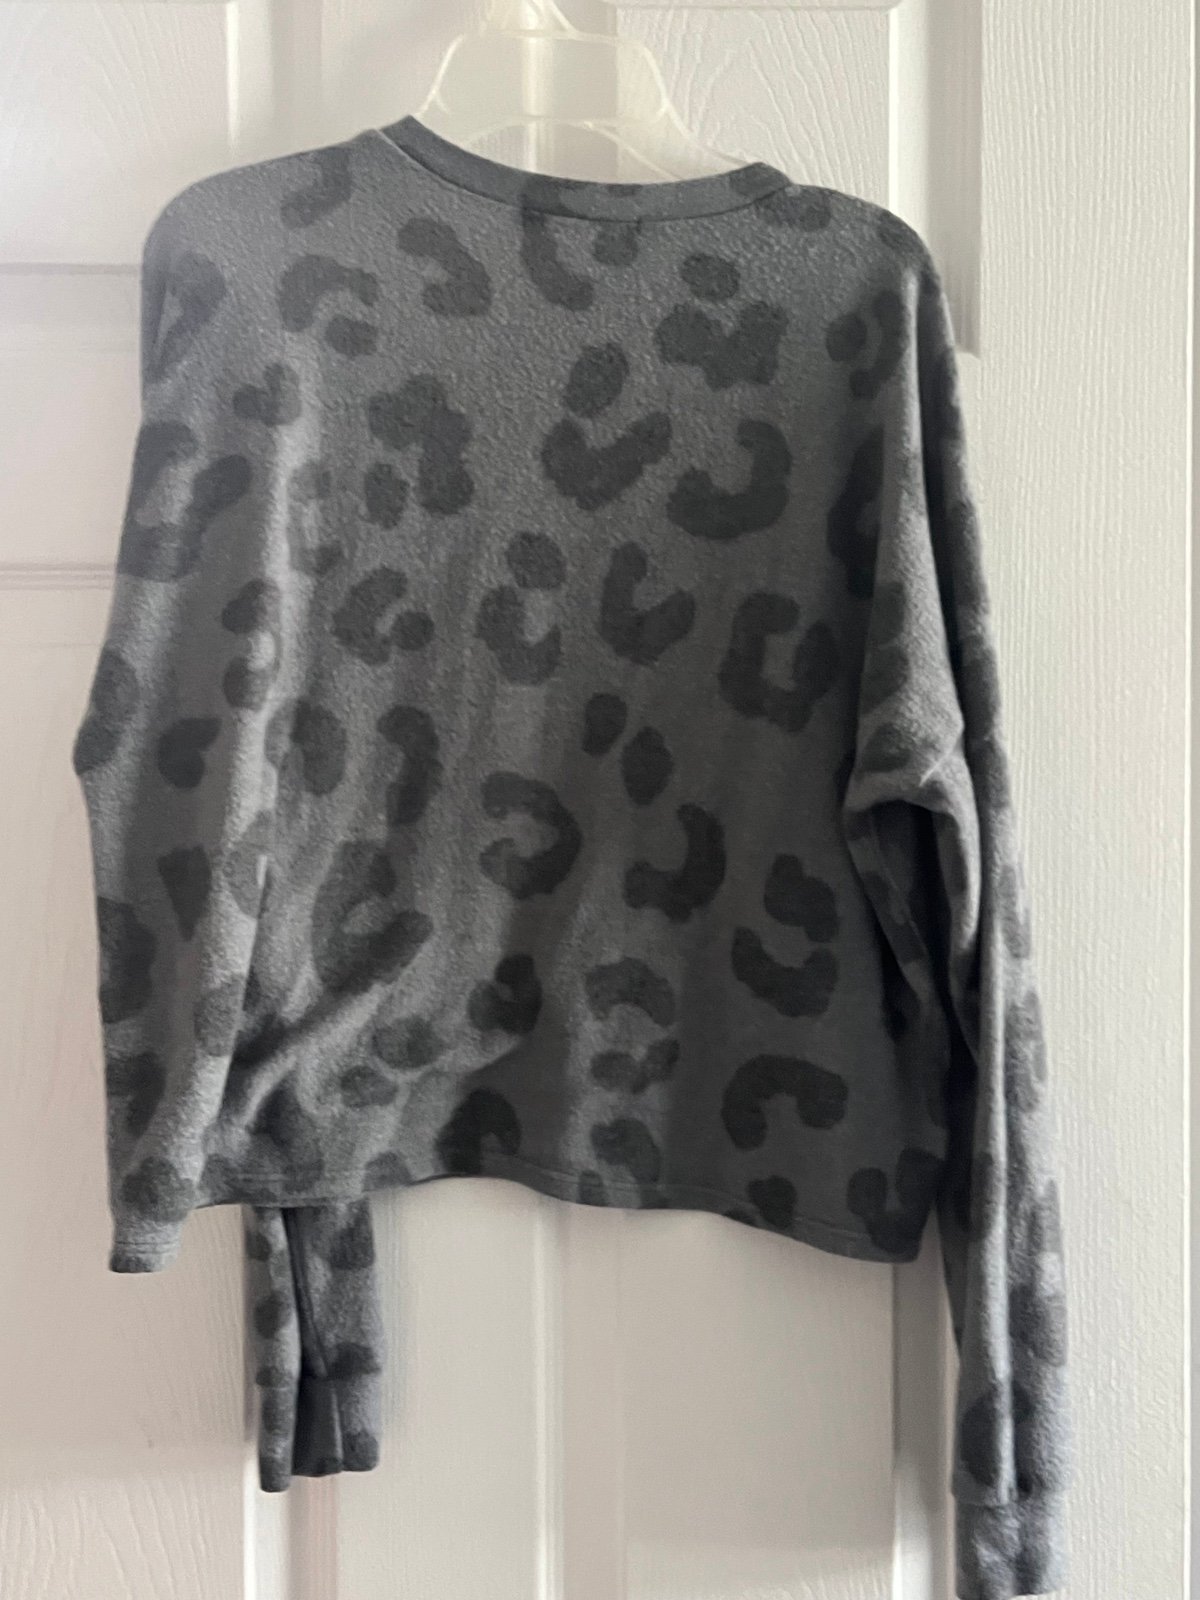 good price Sweater ne5BLon8t online store